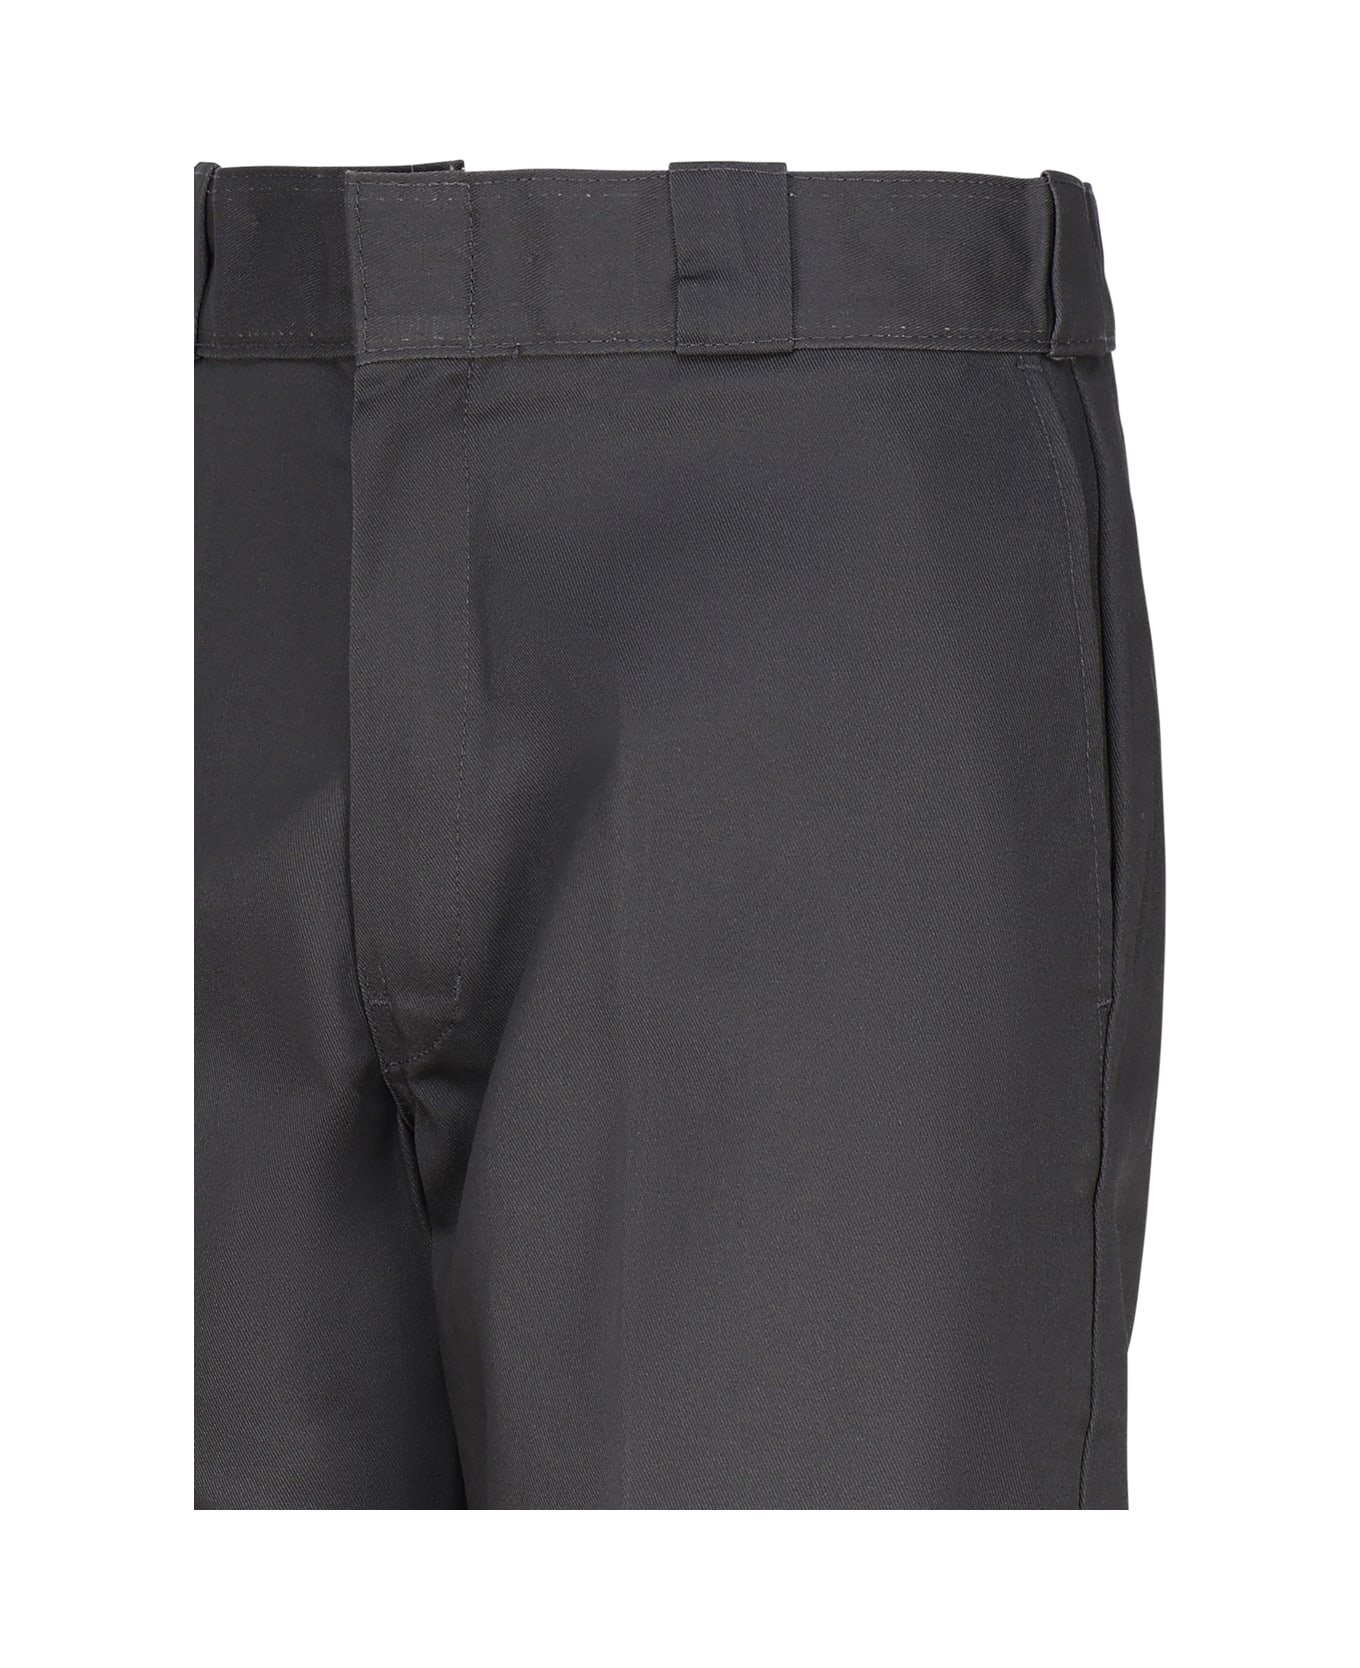 Dickies Work Trousers 874 - Charcoal grey